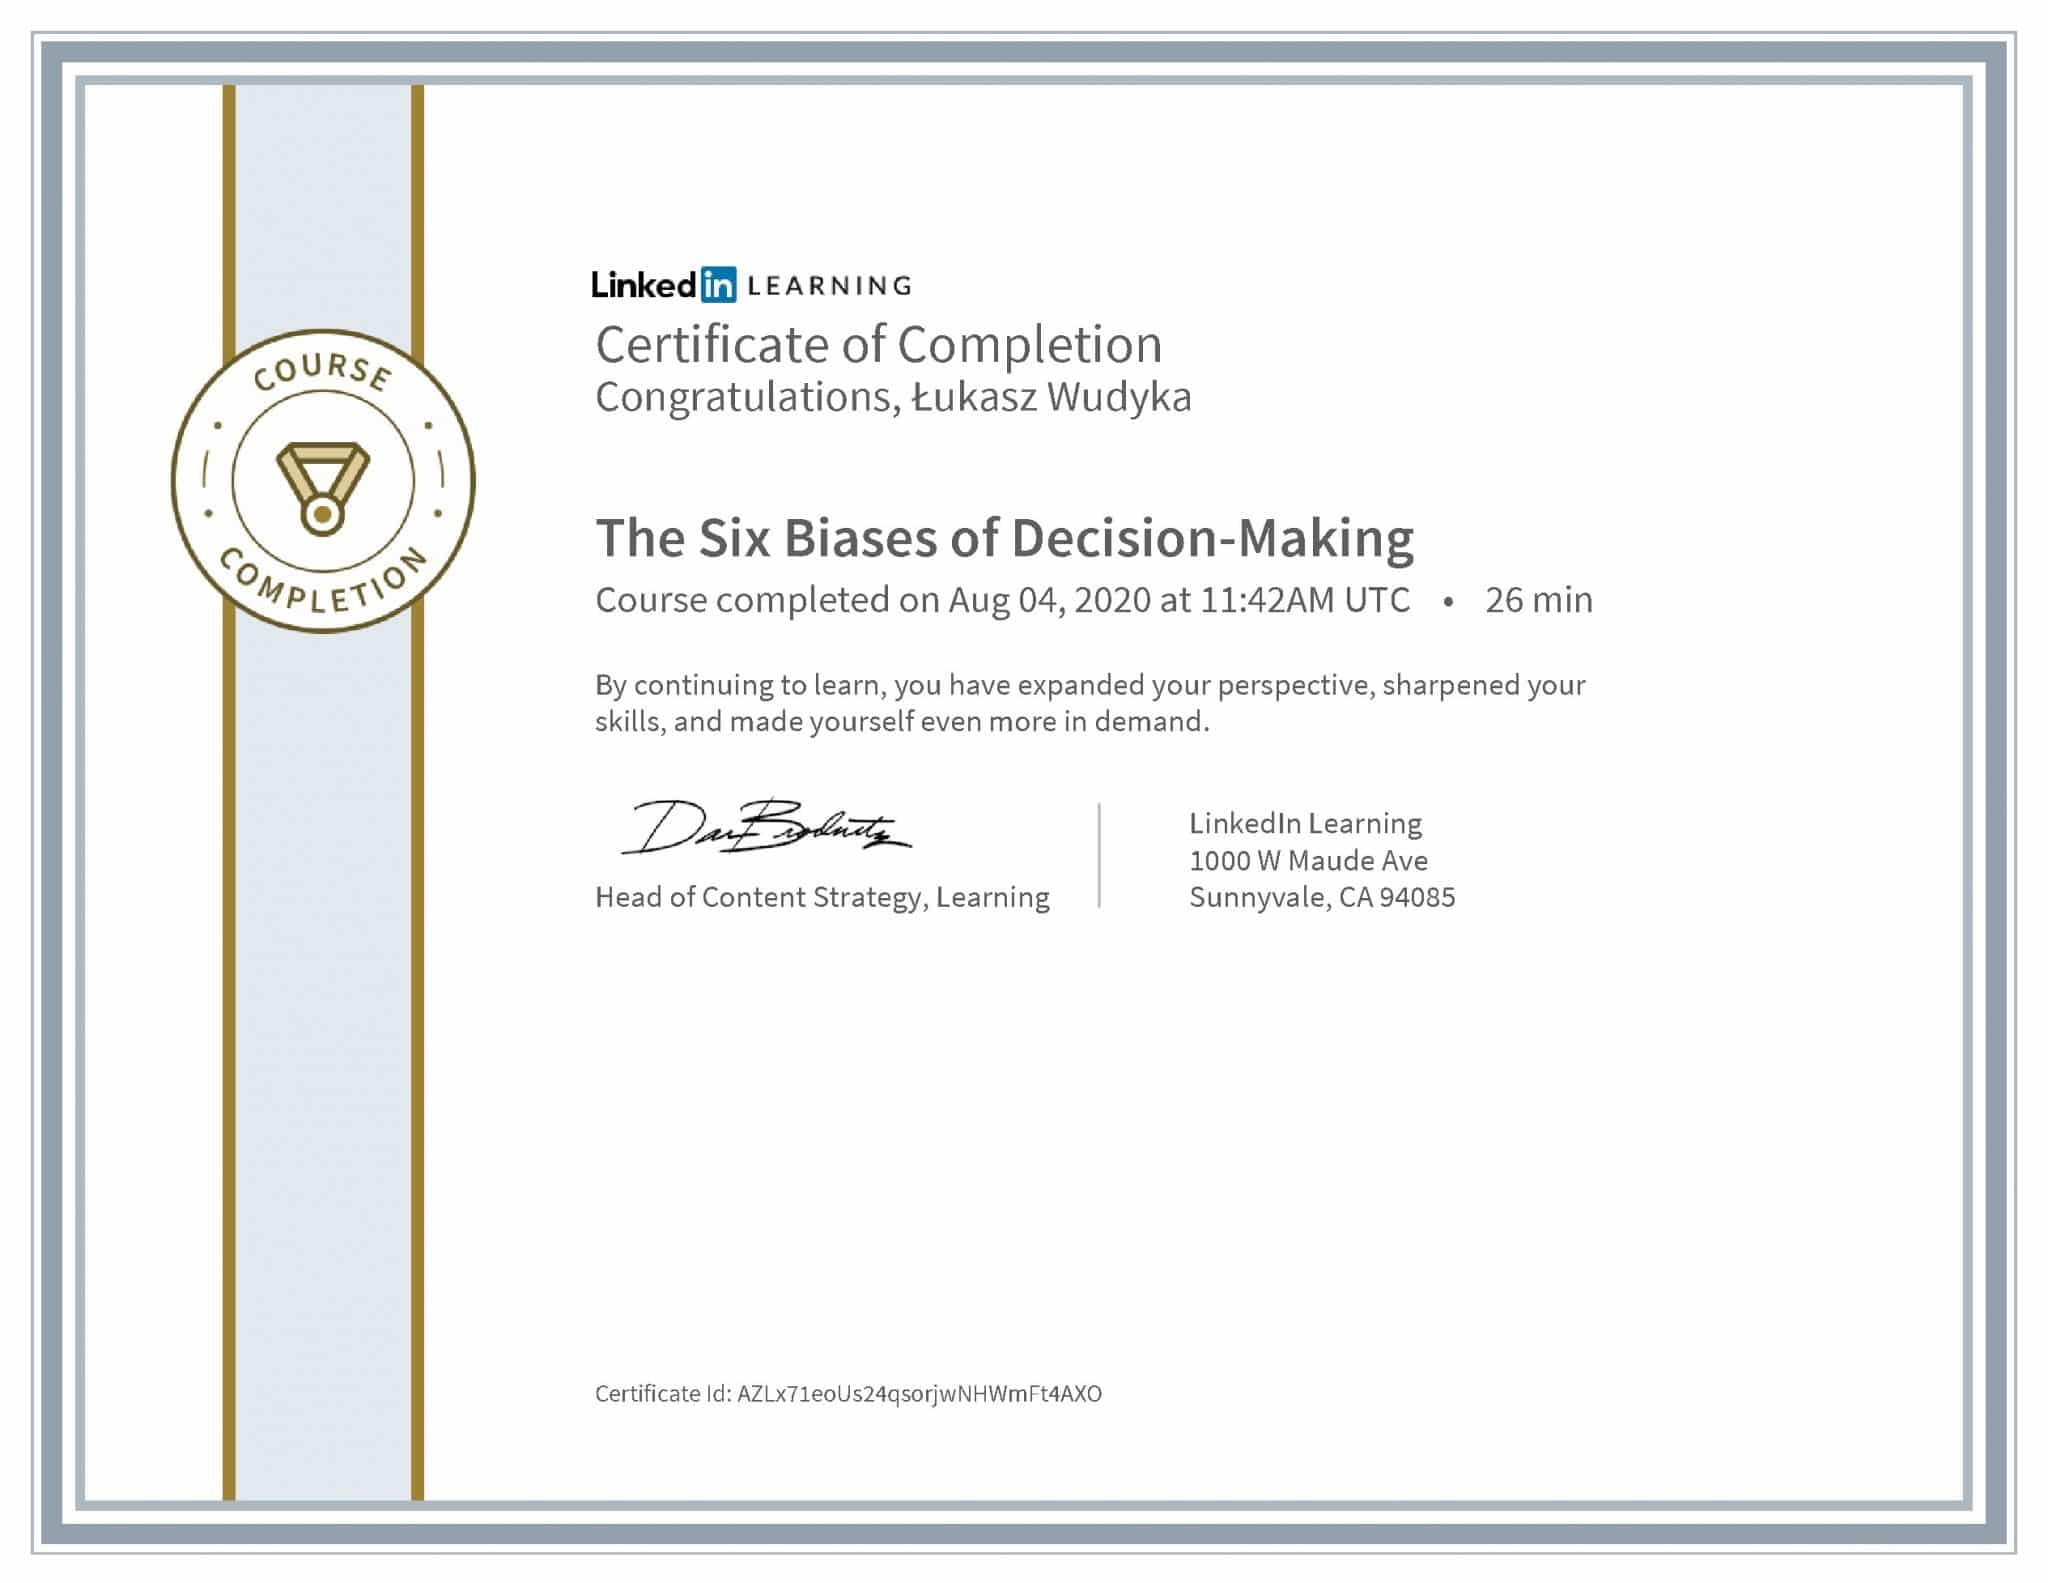 Łukasz Wudyka certyfikat LinkedIn The Six Biases of Decision-Making